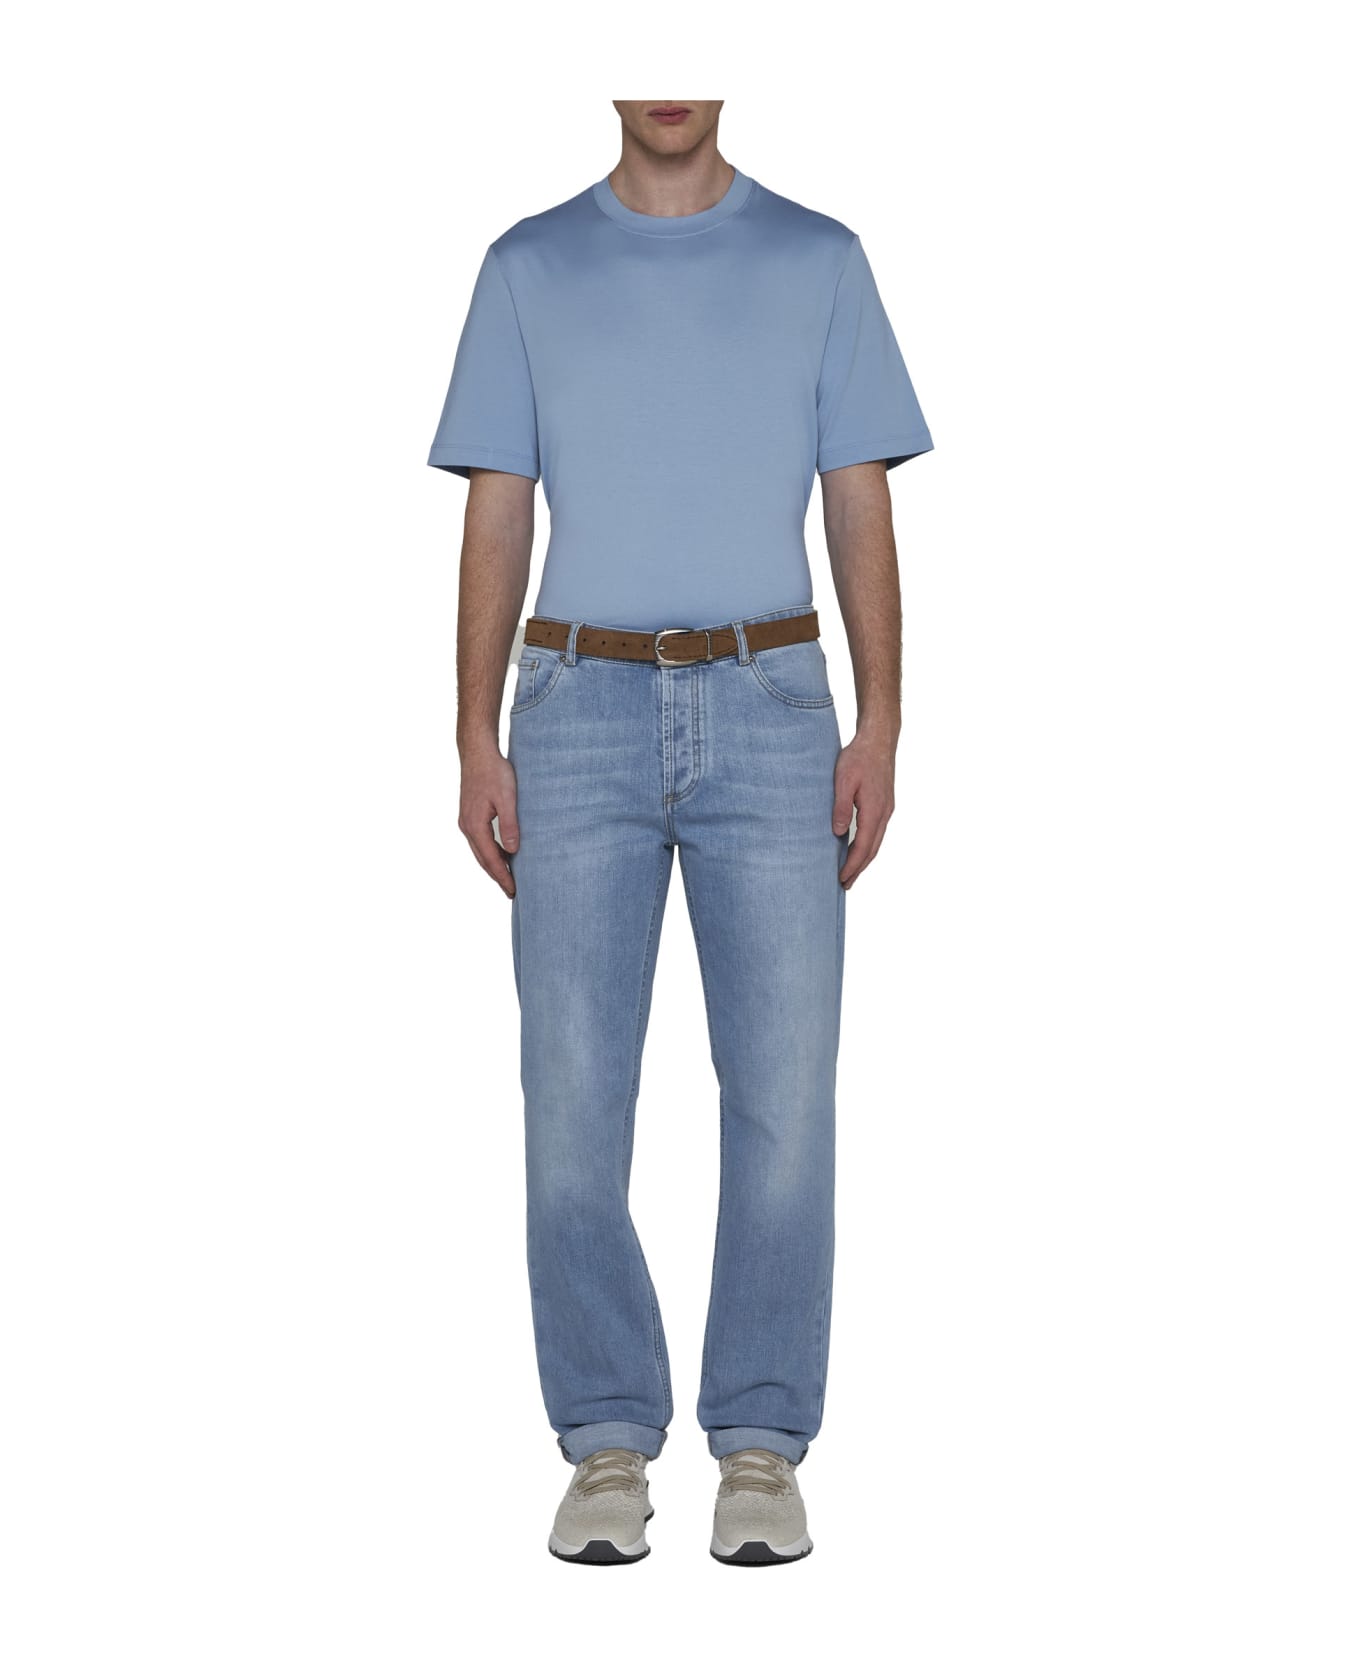 Brunello Cucinelli T-Shirt - Turquoise